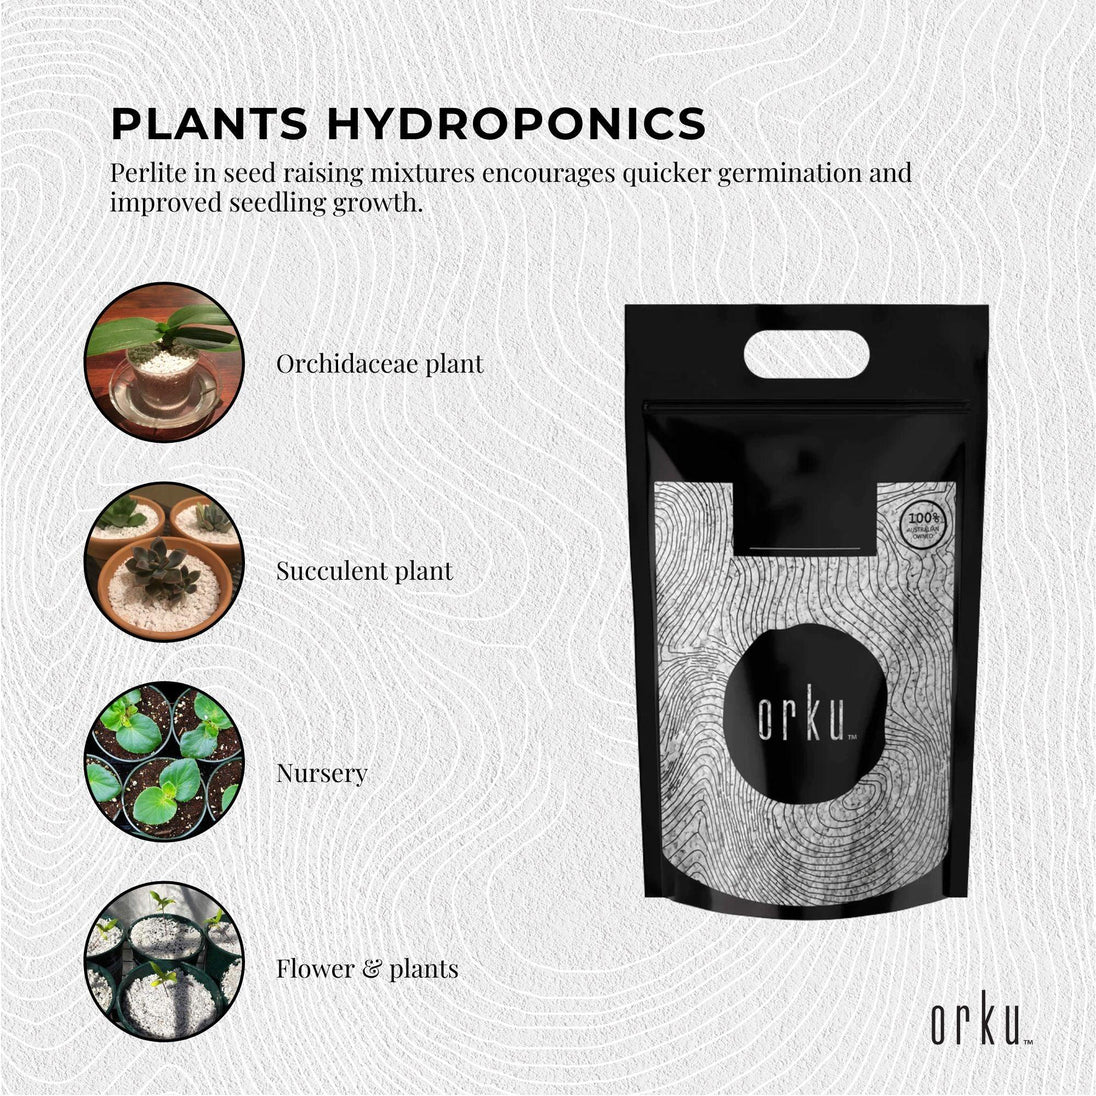 Buy 20L Perlite Coarse Premium Soil Expanded Medium Plants Hydroponics discounted | Products On Sale Australia